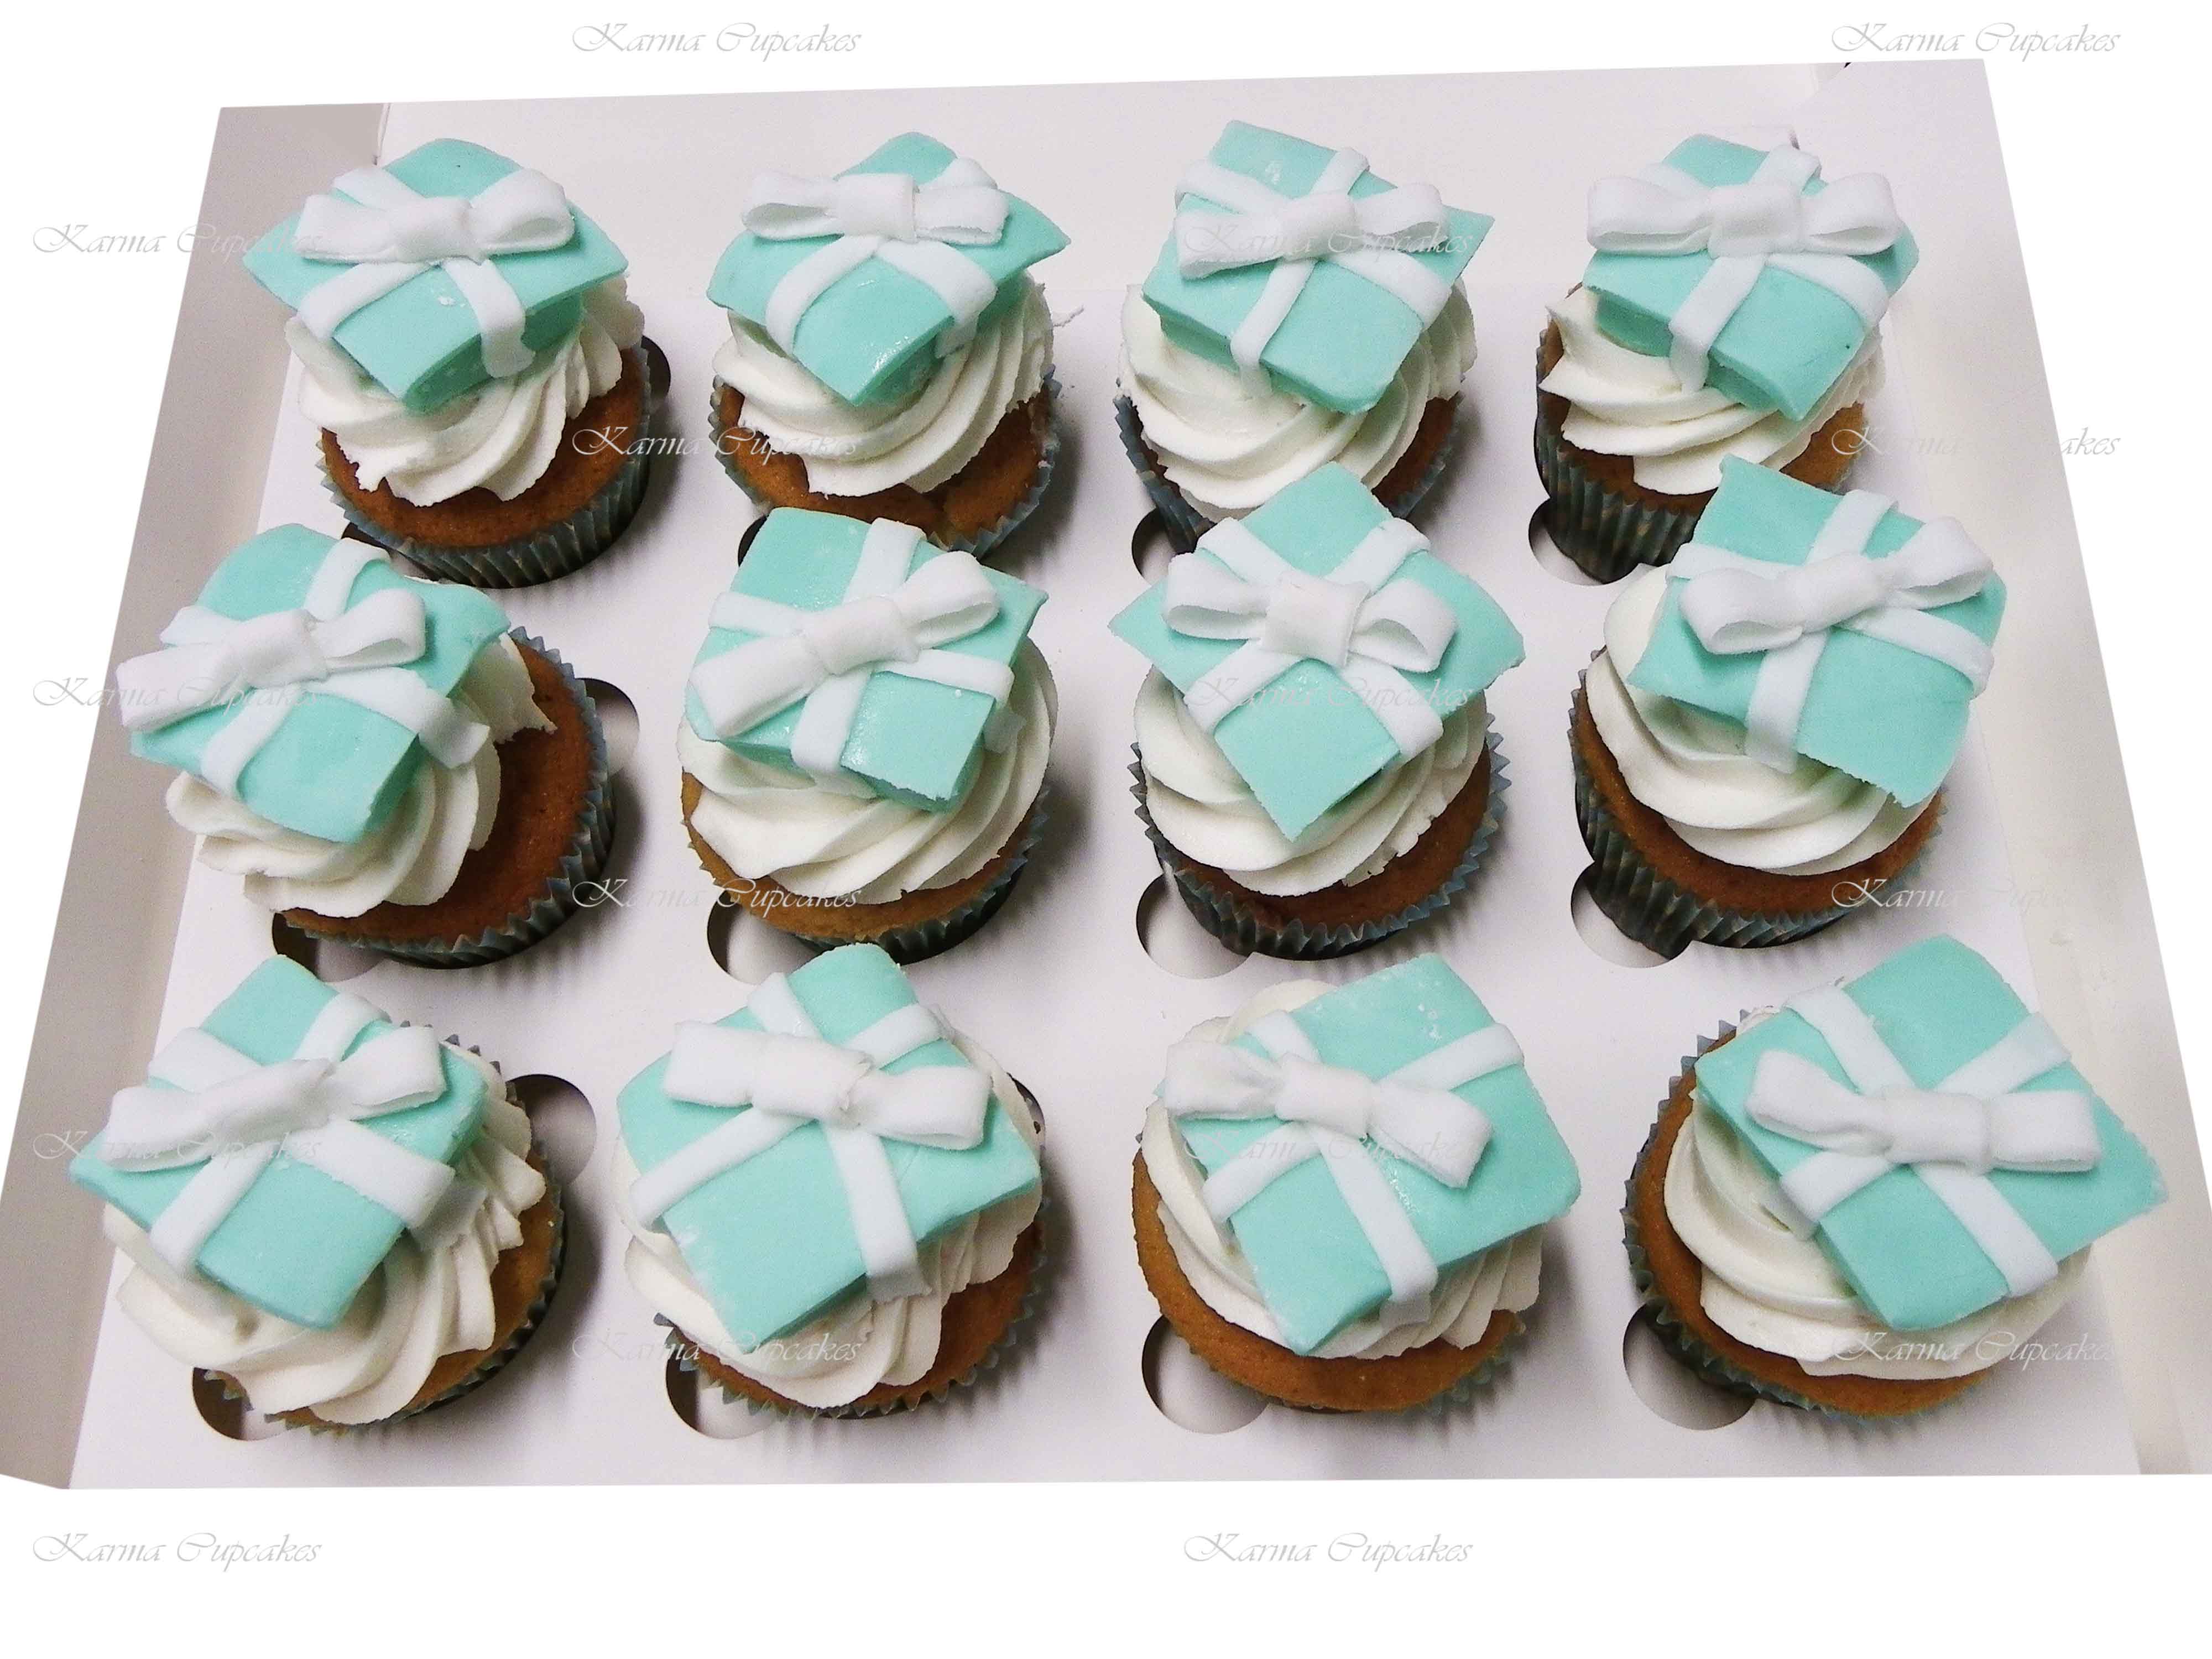 tiffany blue cupcake boxes